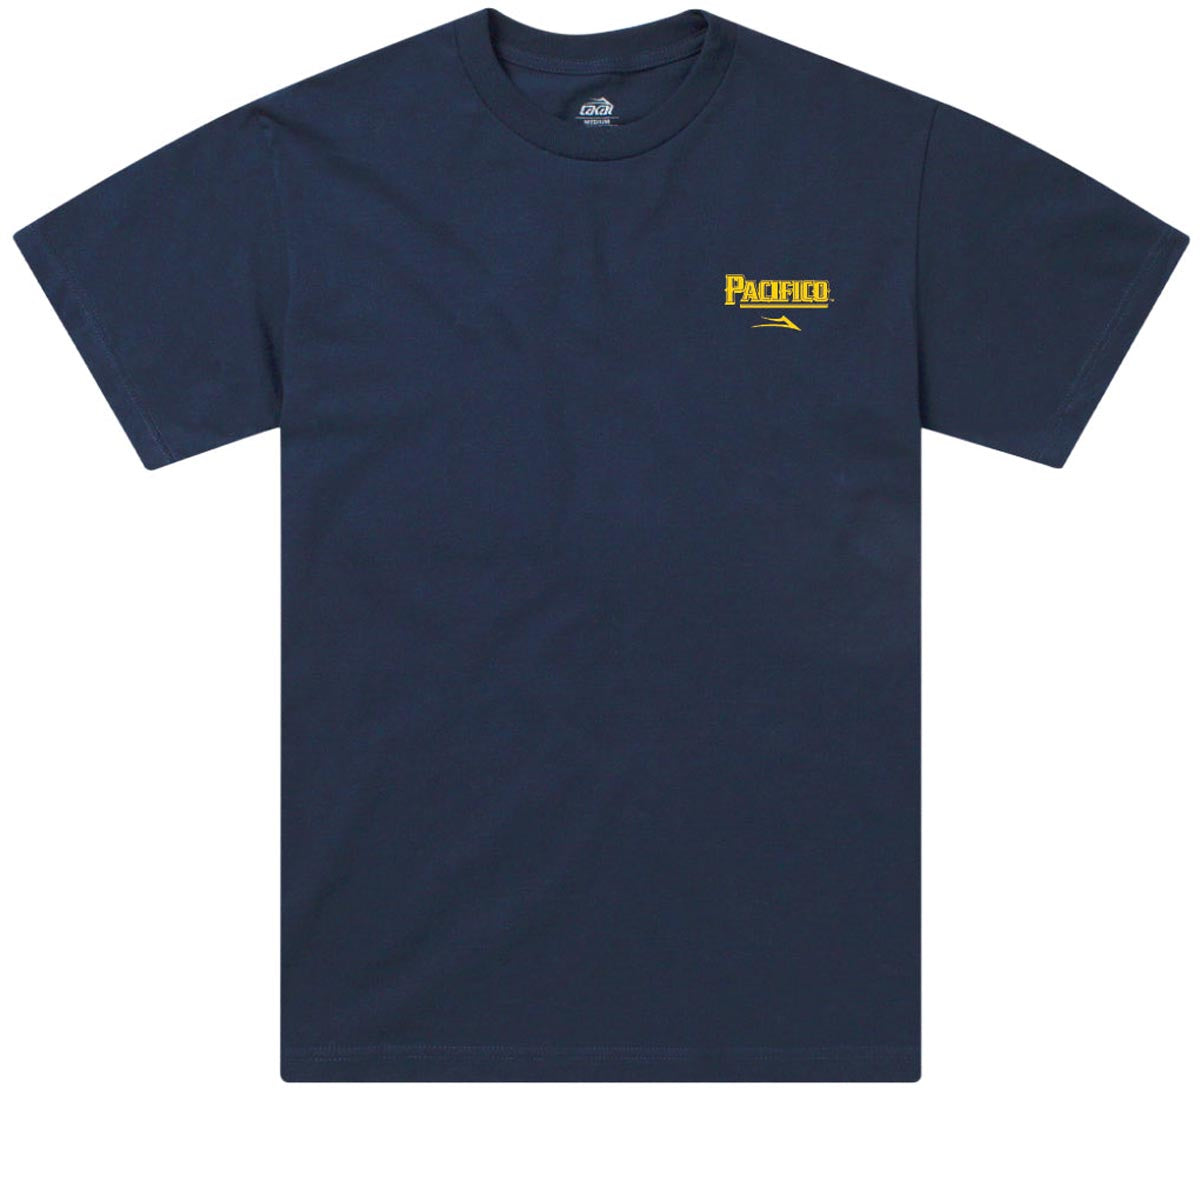 Lakai x Pacifico Cerveza T-Shirt - Navy image 2